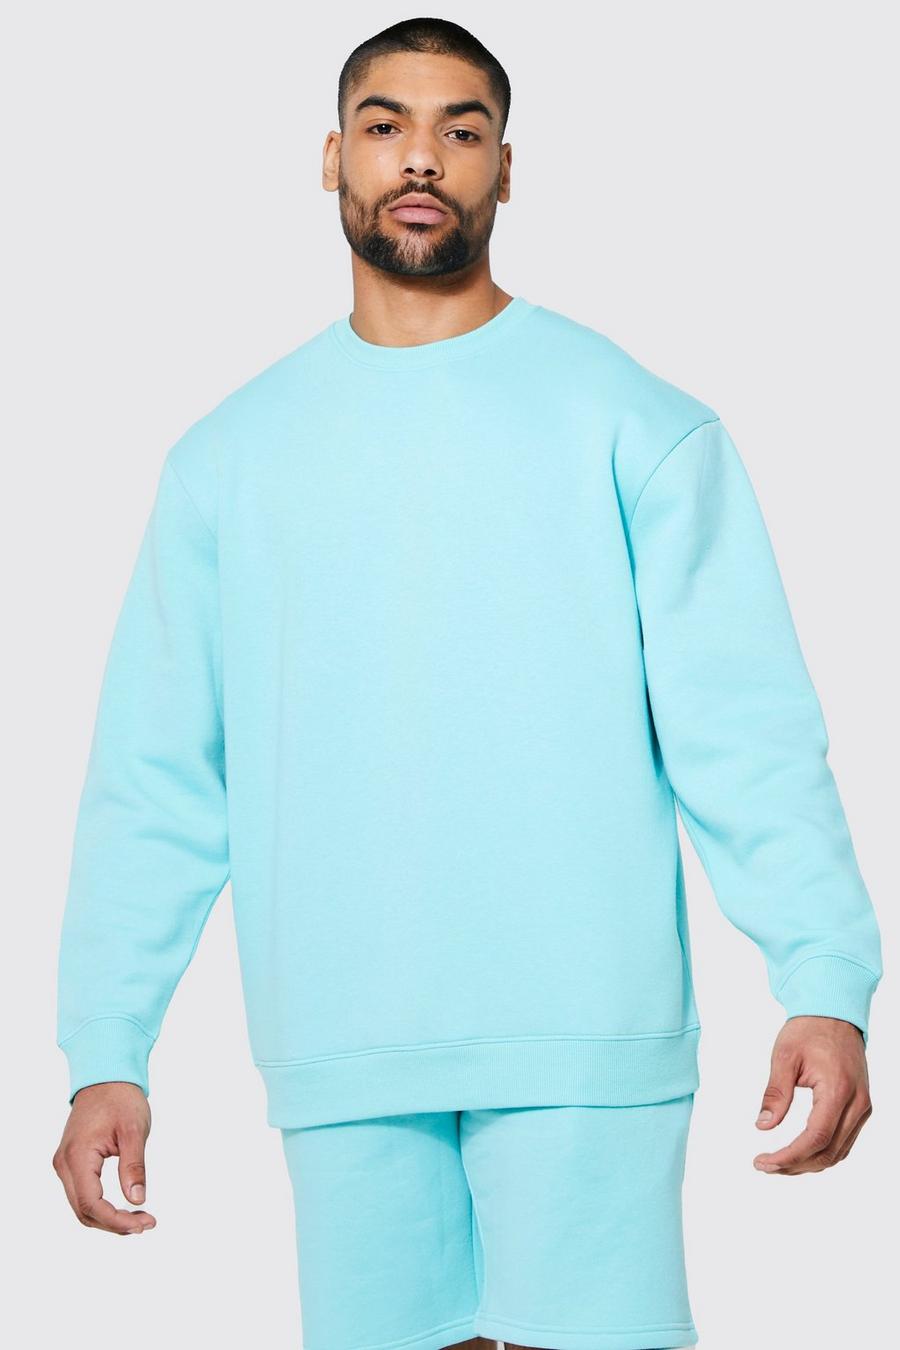 Aqua blue Oversized Sweatshirt